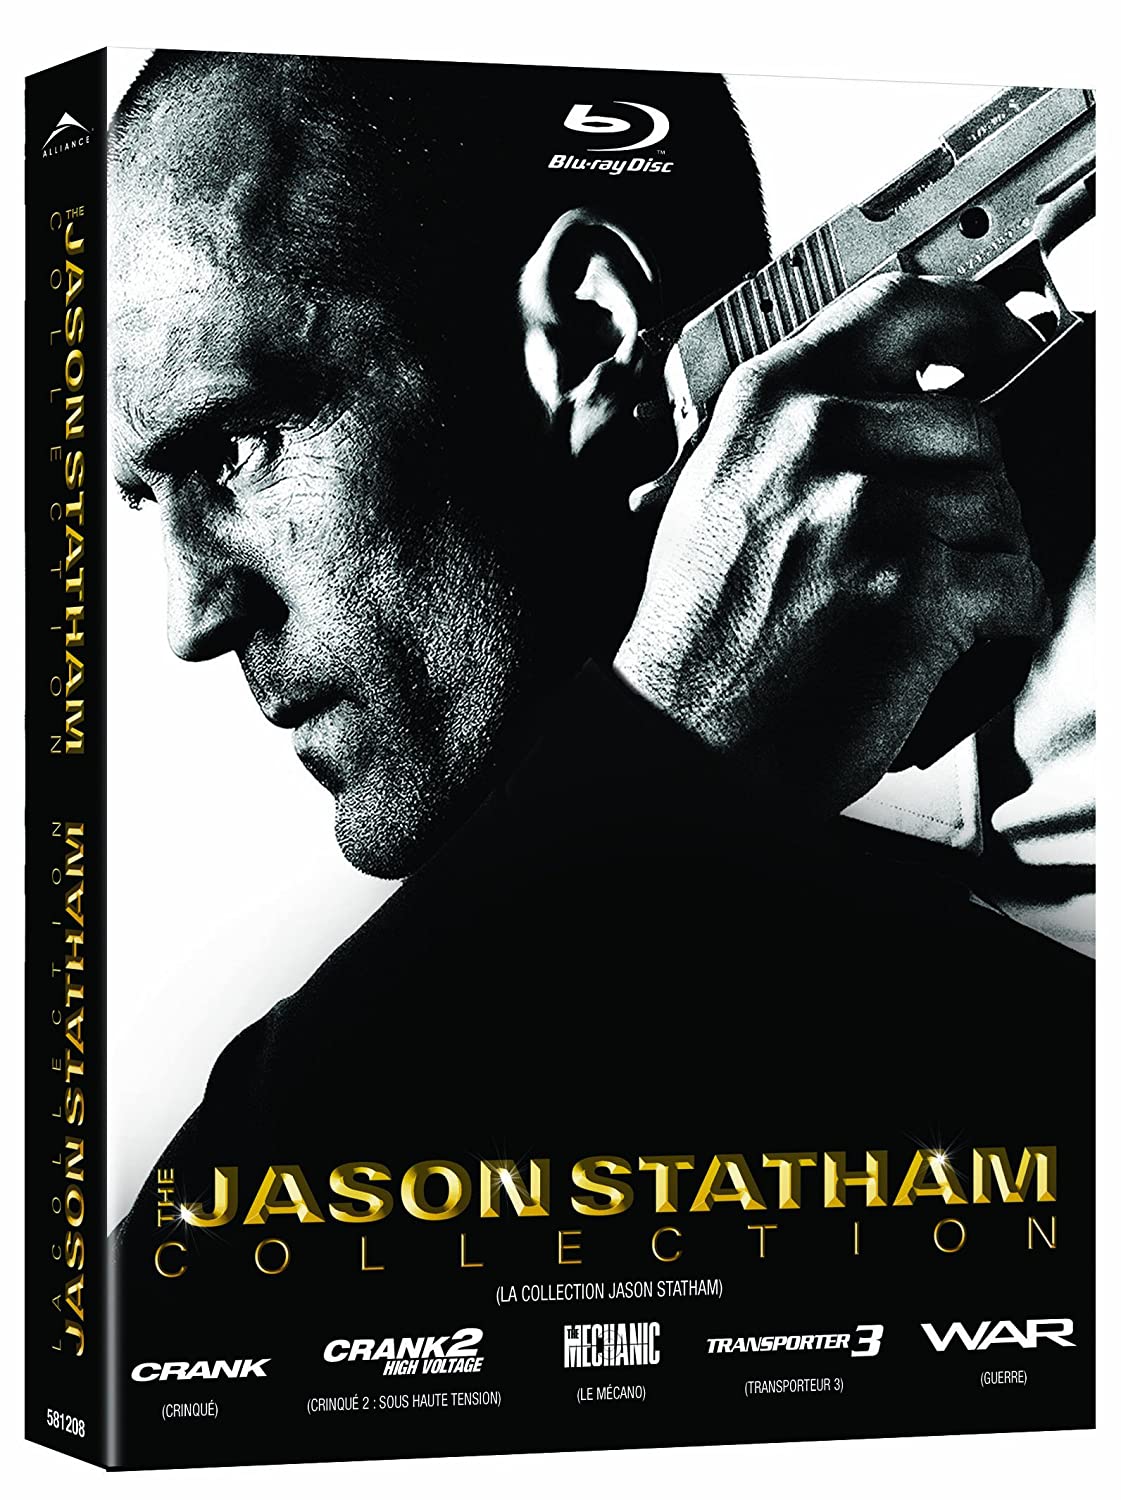 The Jason Statham 5 Movie Collection